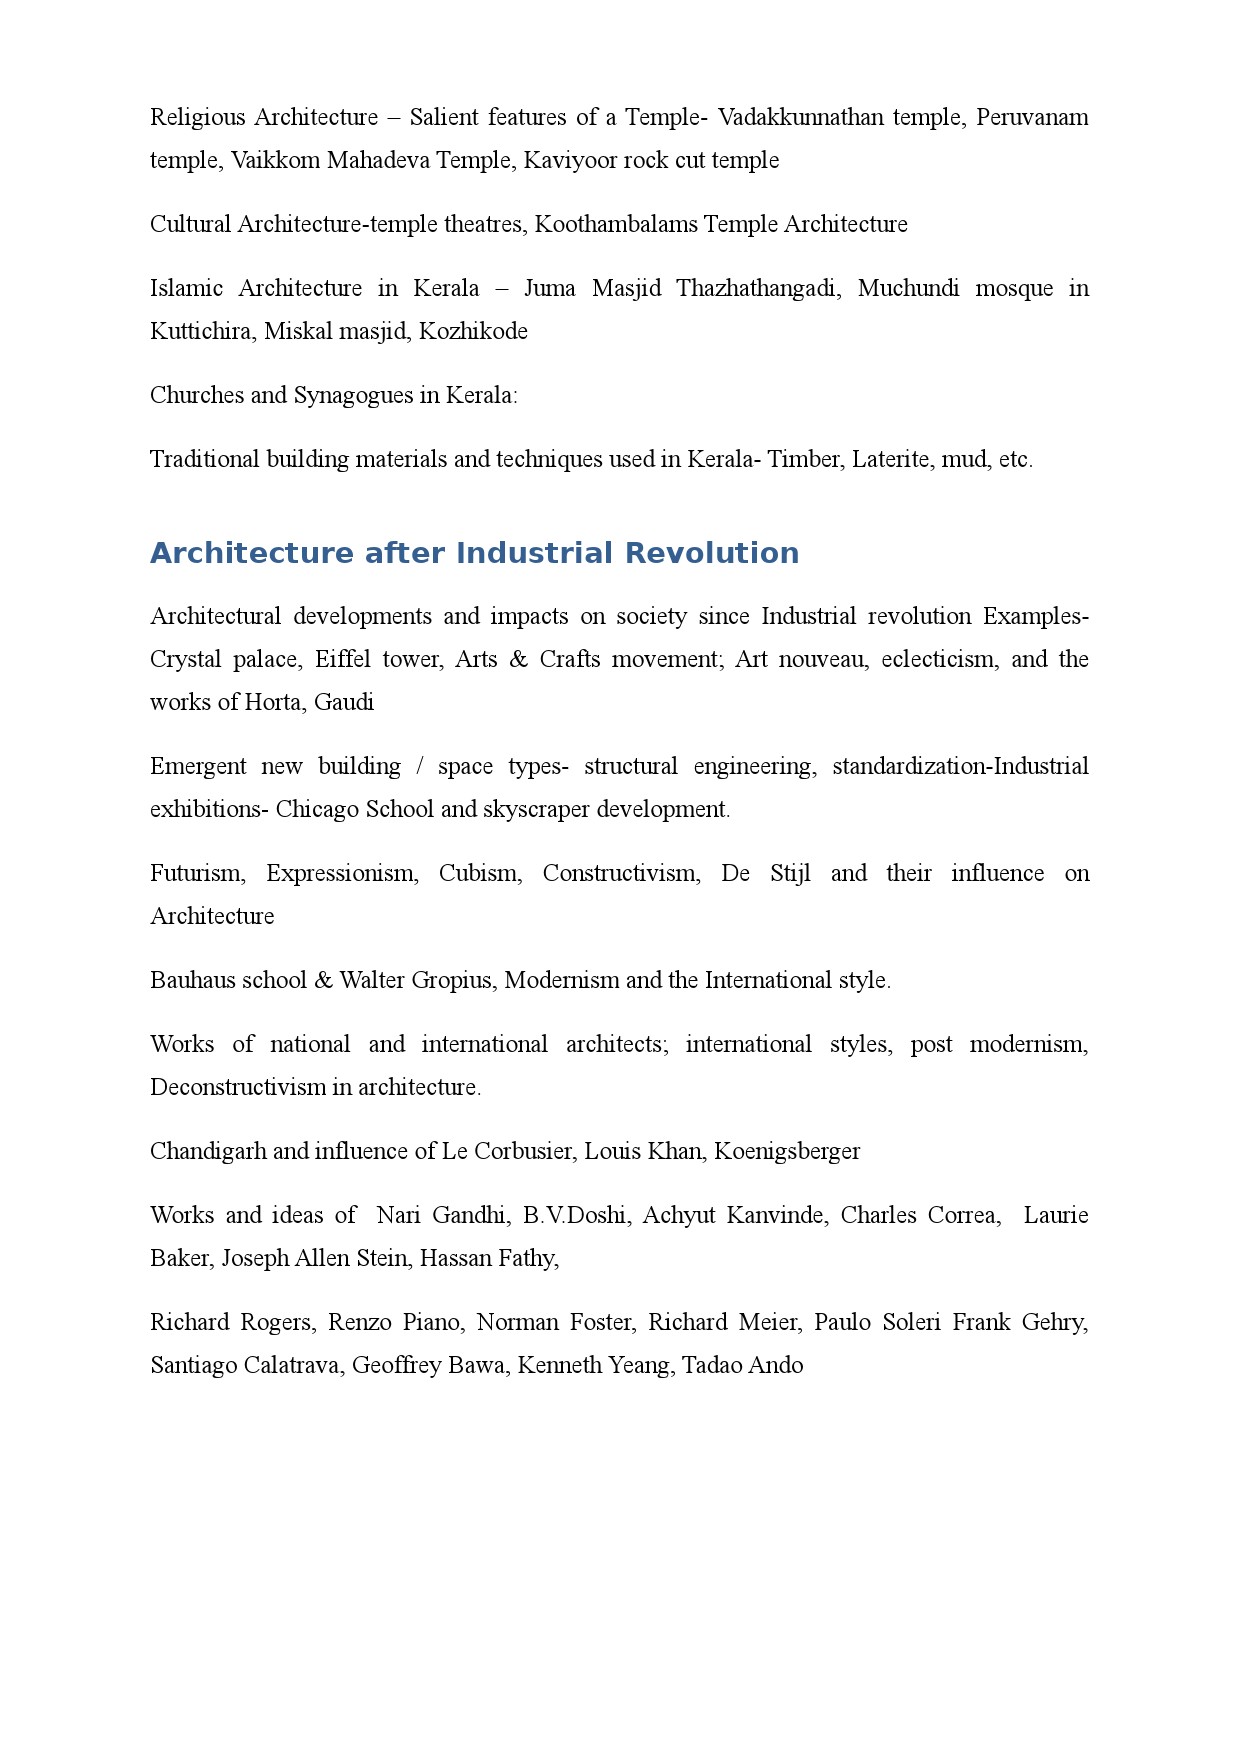 KPSC Syllabus 2021 Architectural Head Draftsman - Notification Image 5